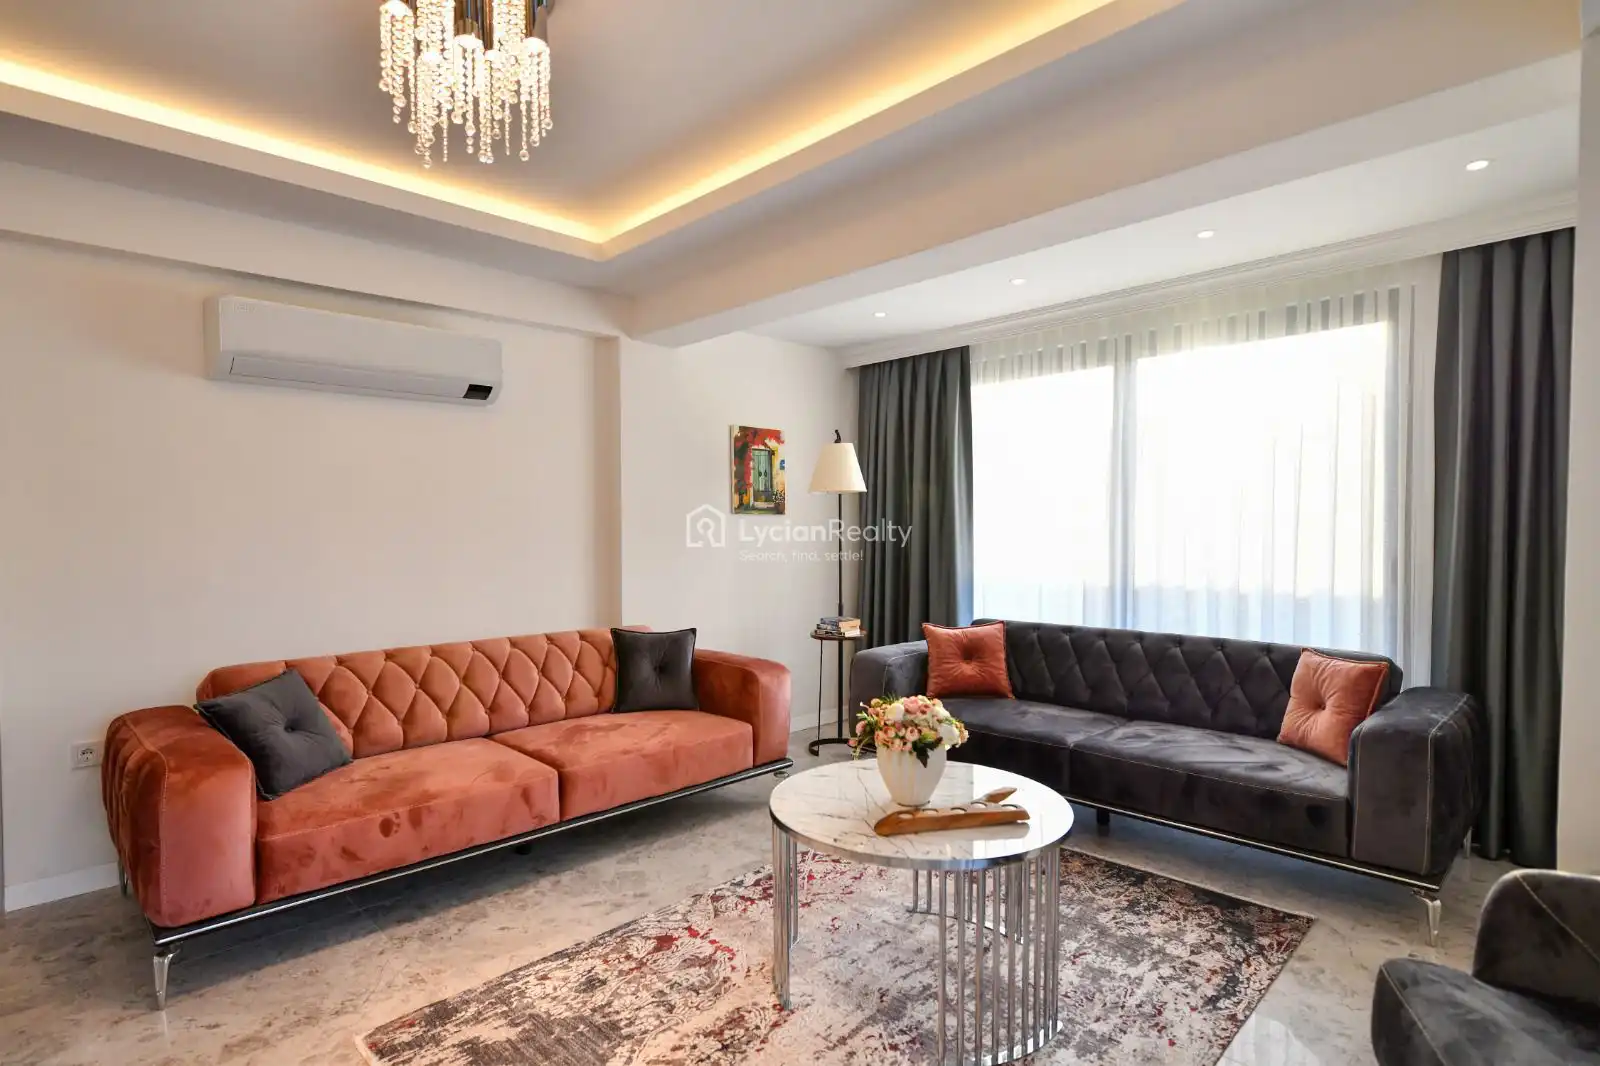 Villa for rent in Fethiye Calis | VILLA JEWELLERY